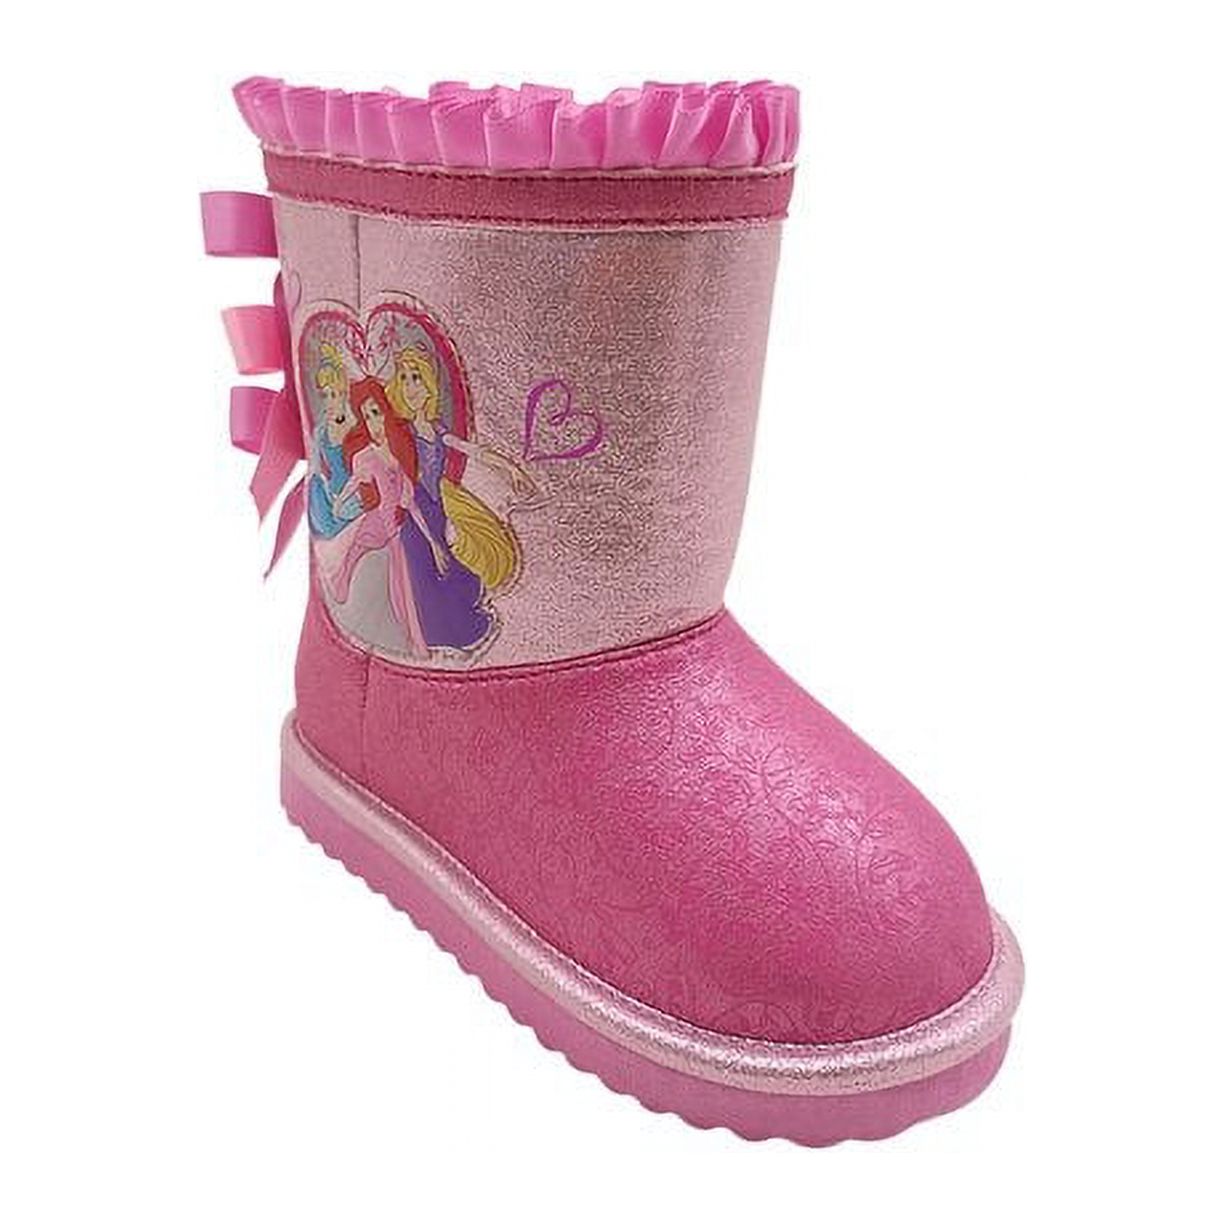 Disney Princess Cozy Faux Shearling Winter Boot (Toddler Girls) - image 5 of 5